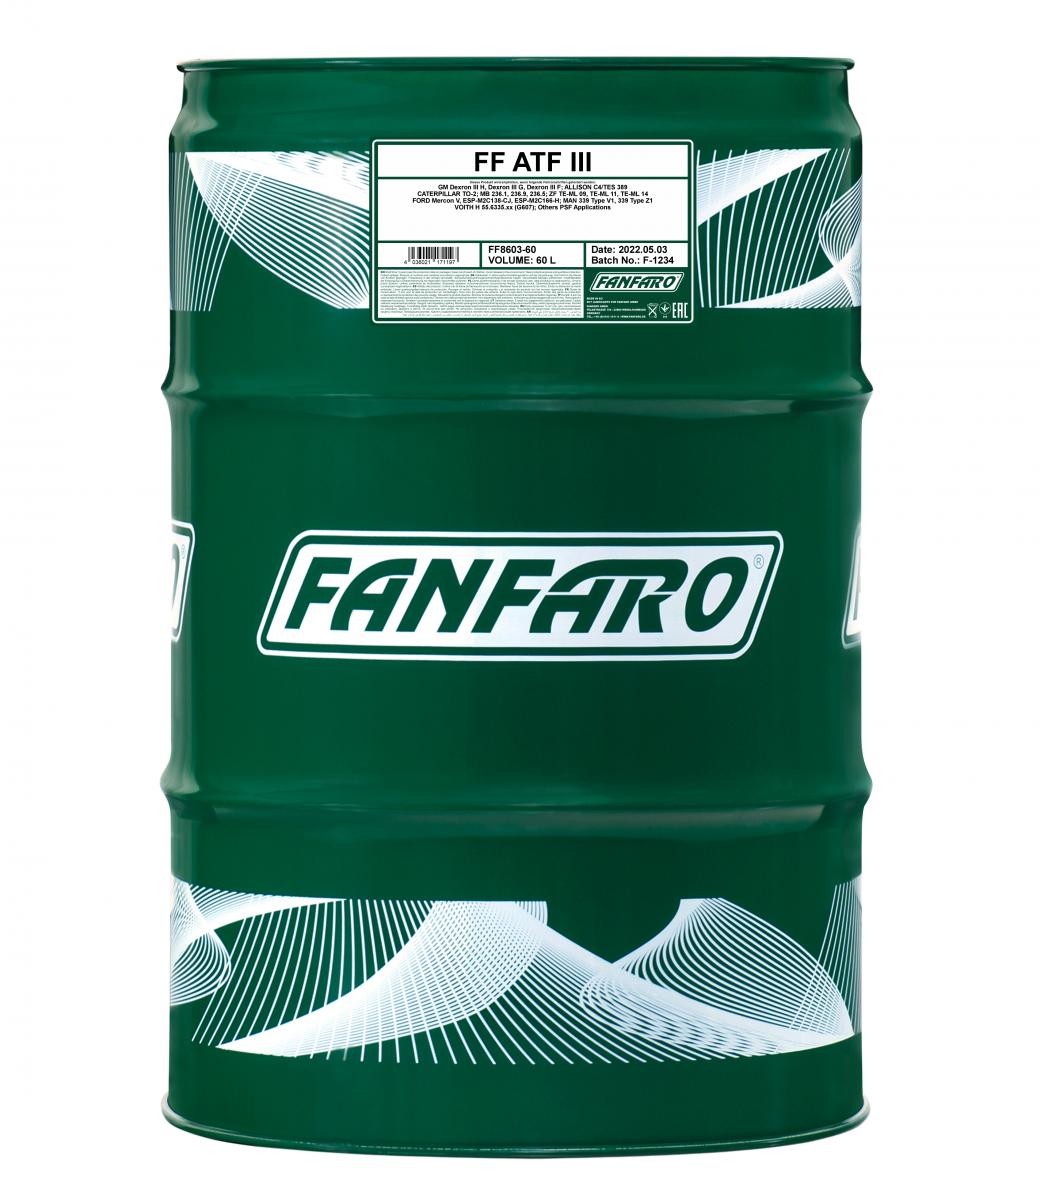 FF8603-60 FANFARO Automatikgetriebeöl VOLVO N 10